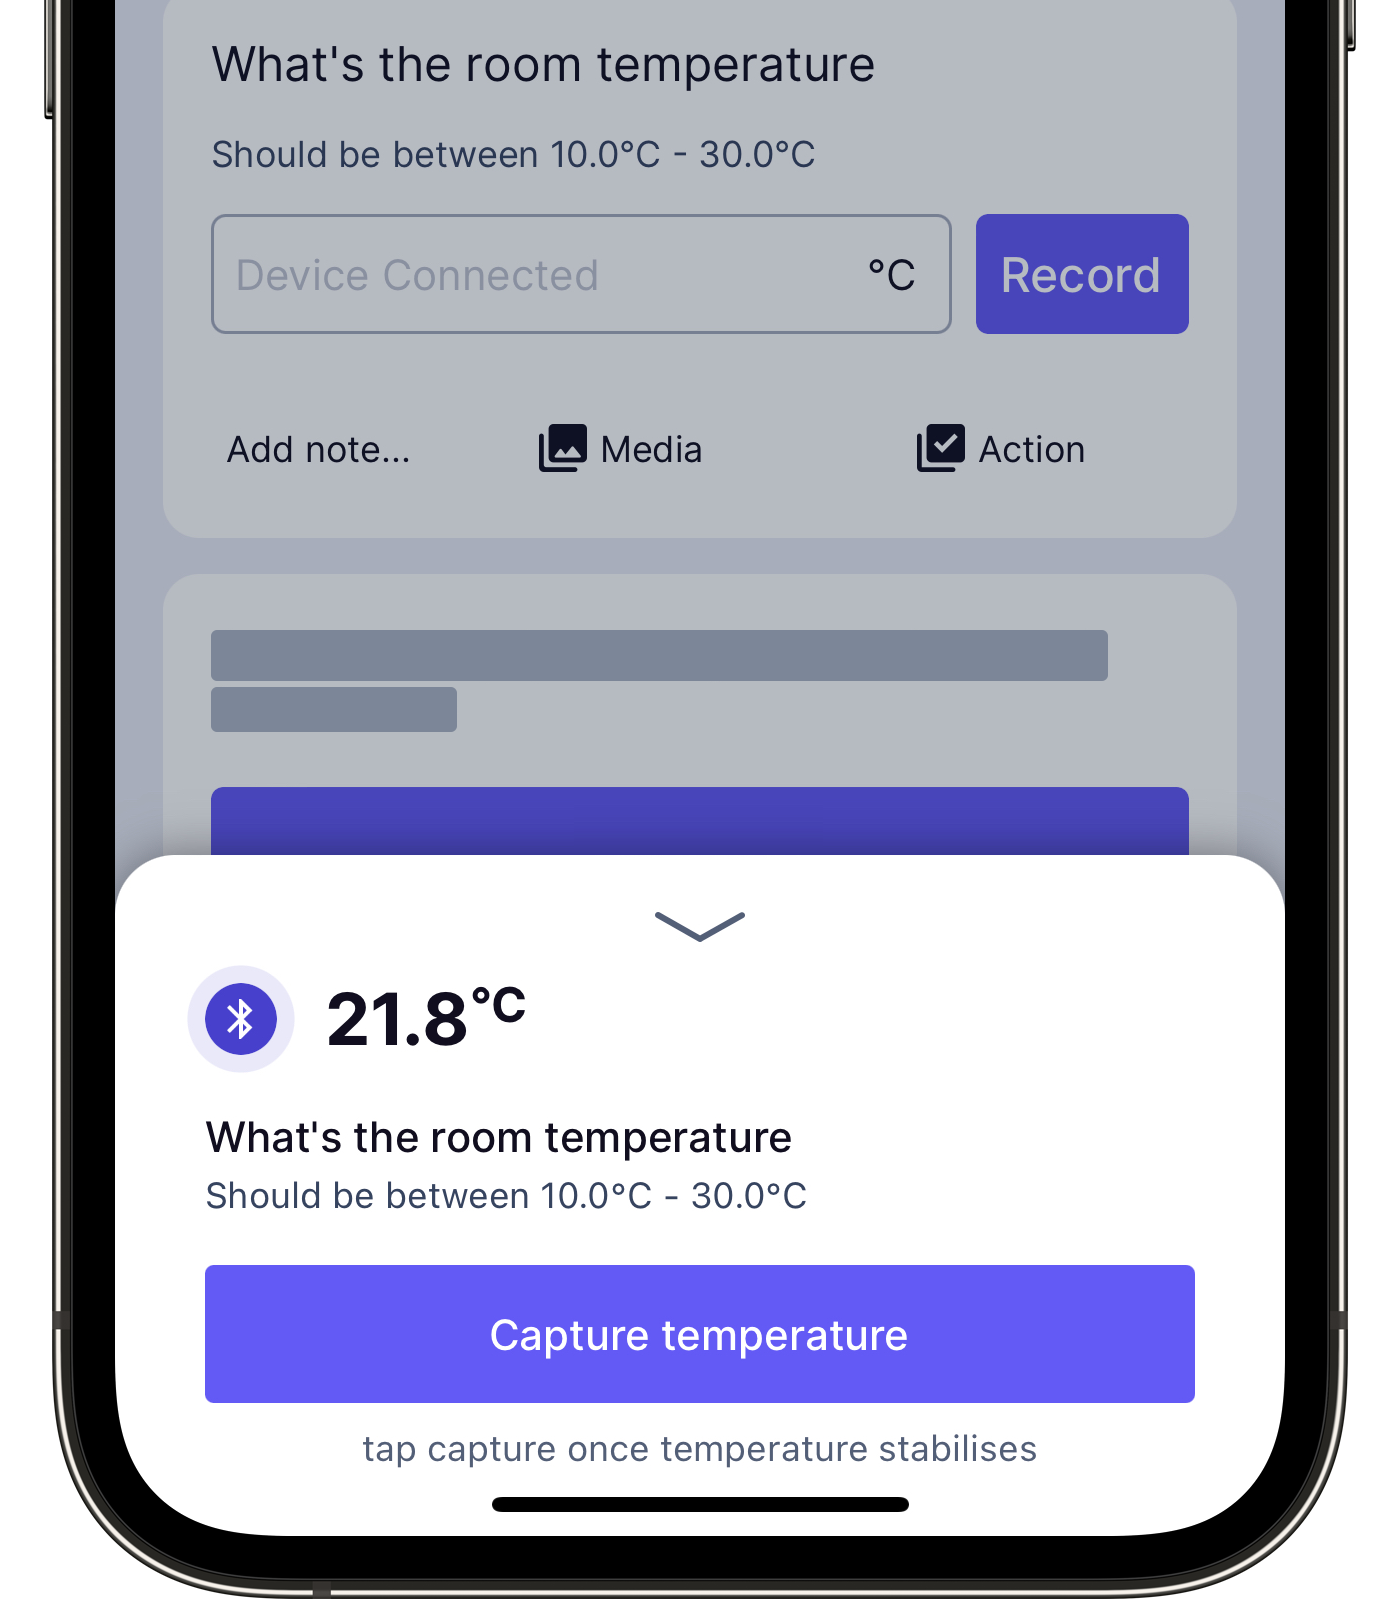 Capture temperature readings via the mobile app.